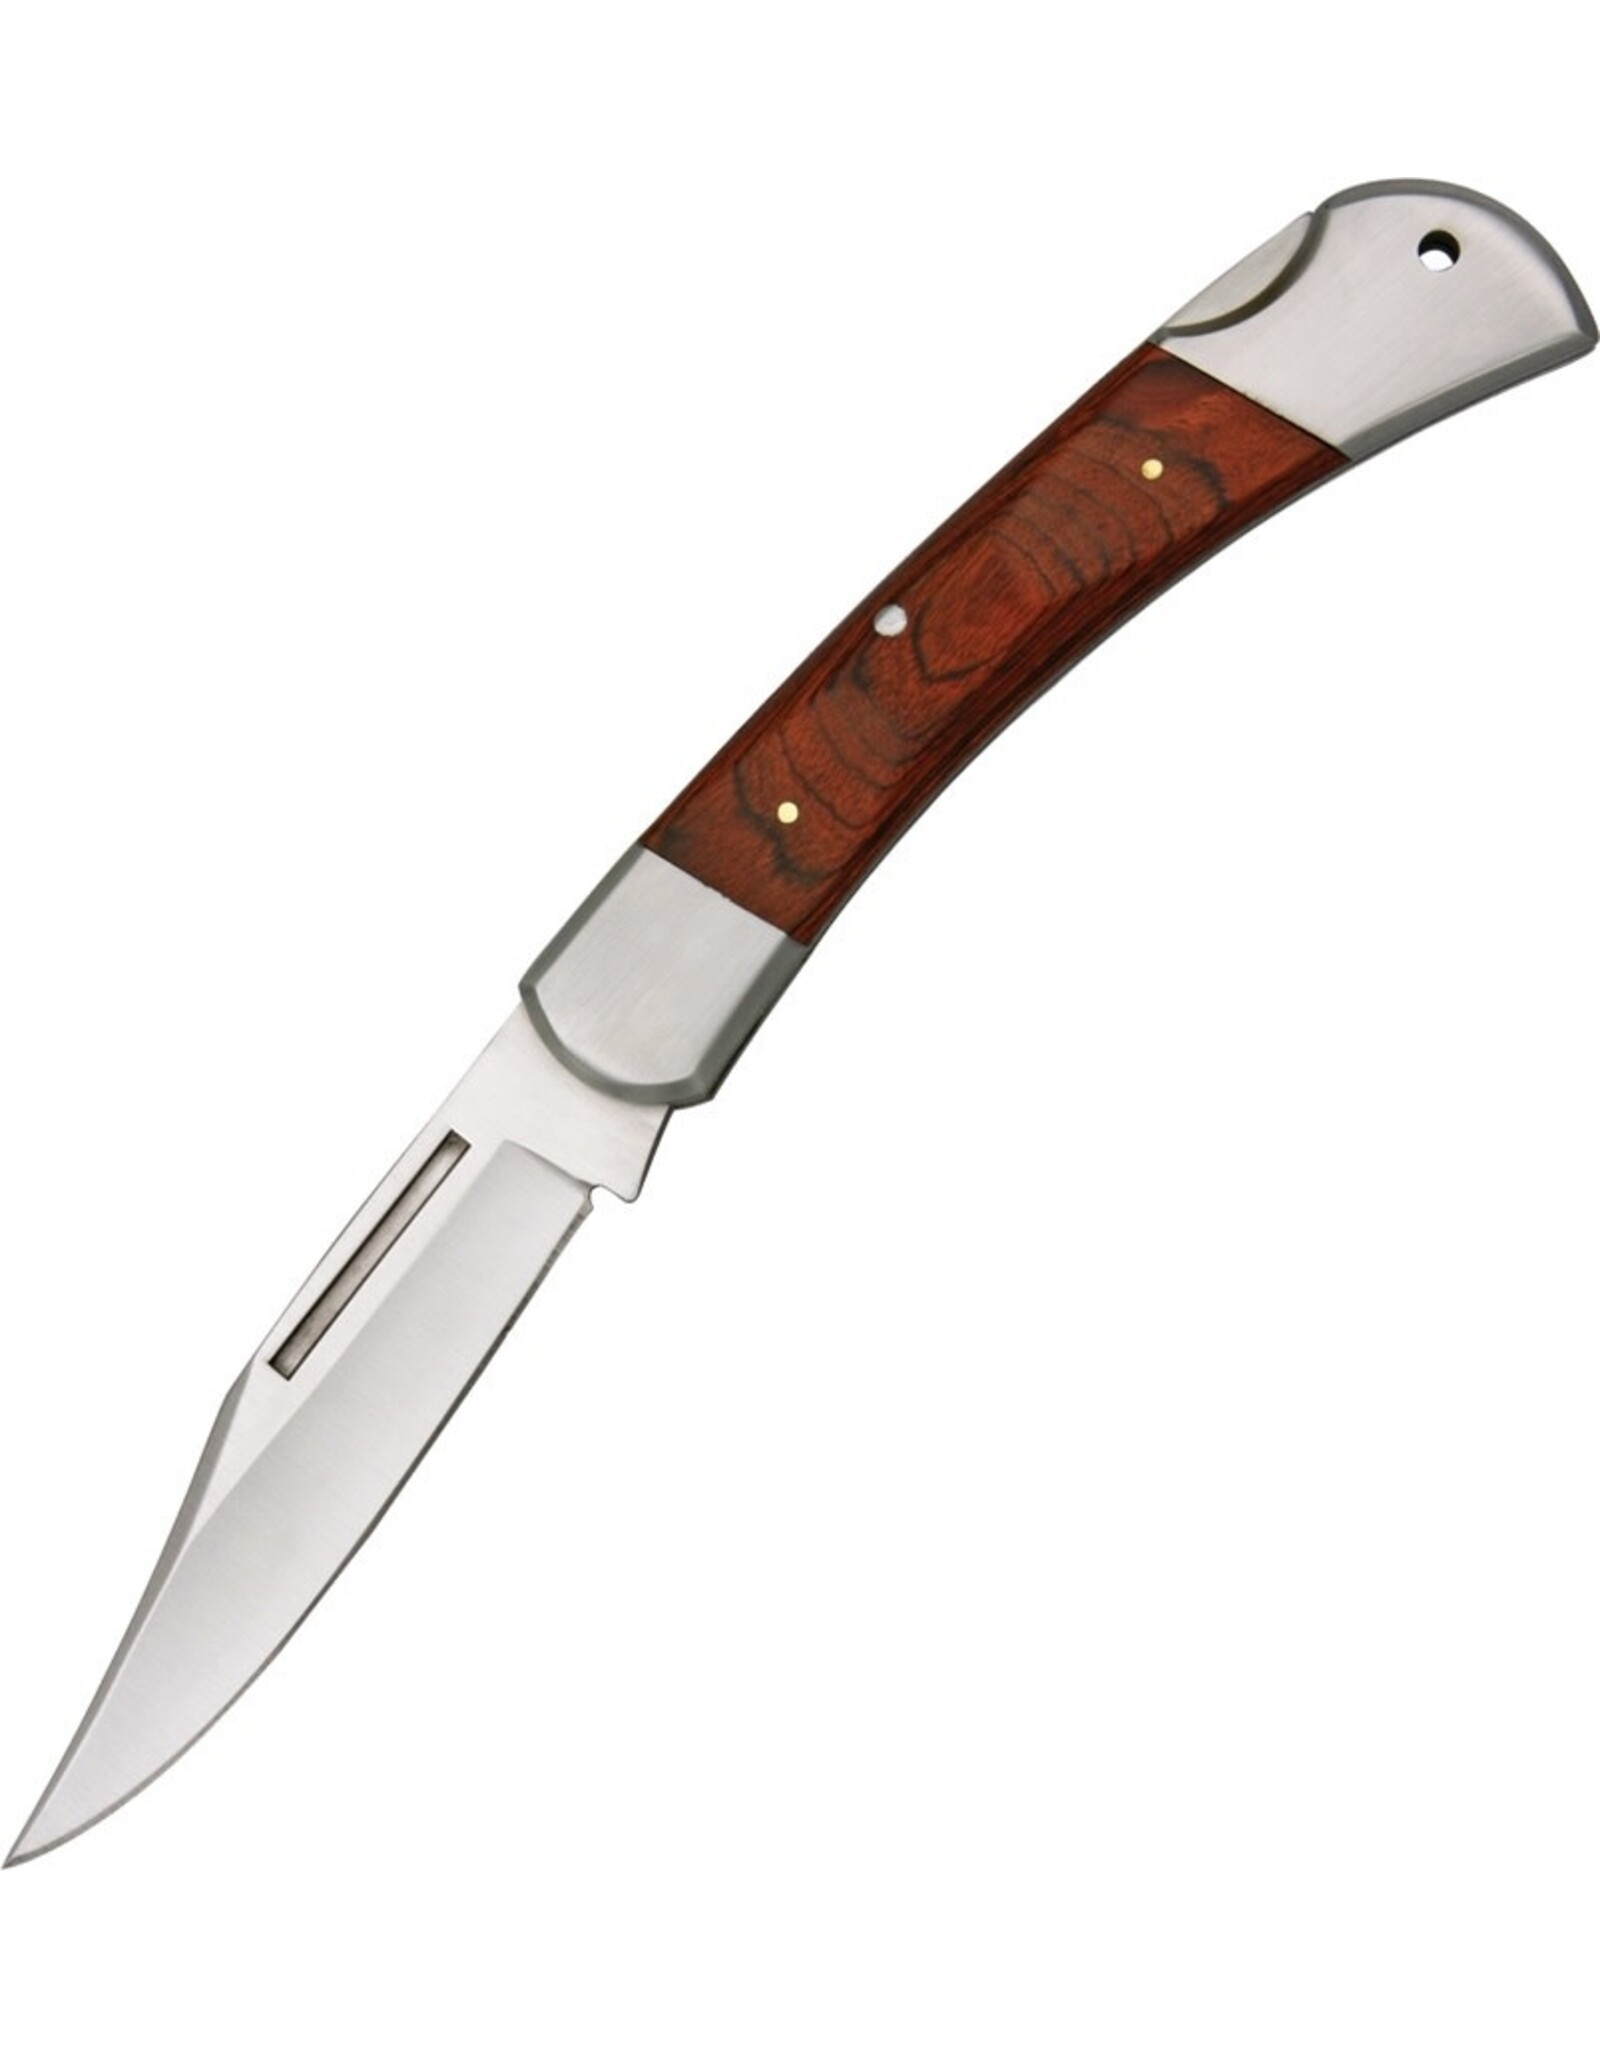 Rite Edge Rite Edge CN2108265 Classic with Brown Wood Handles Lockback Folding Pocket Knife